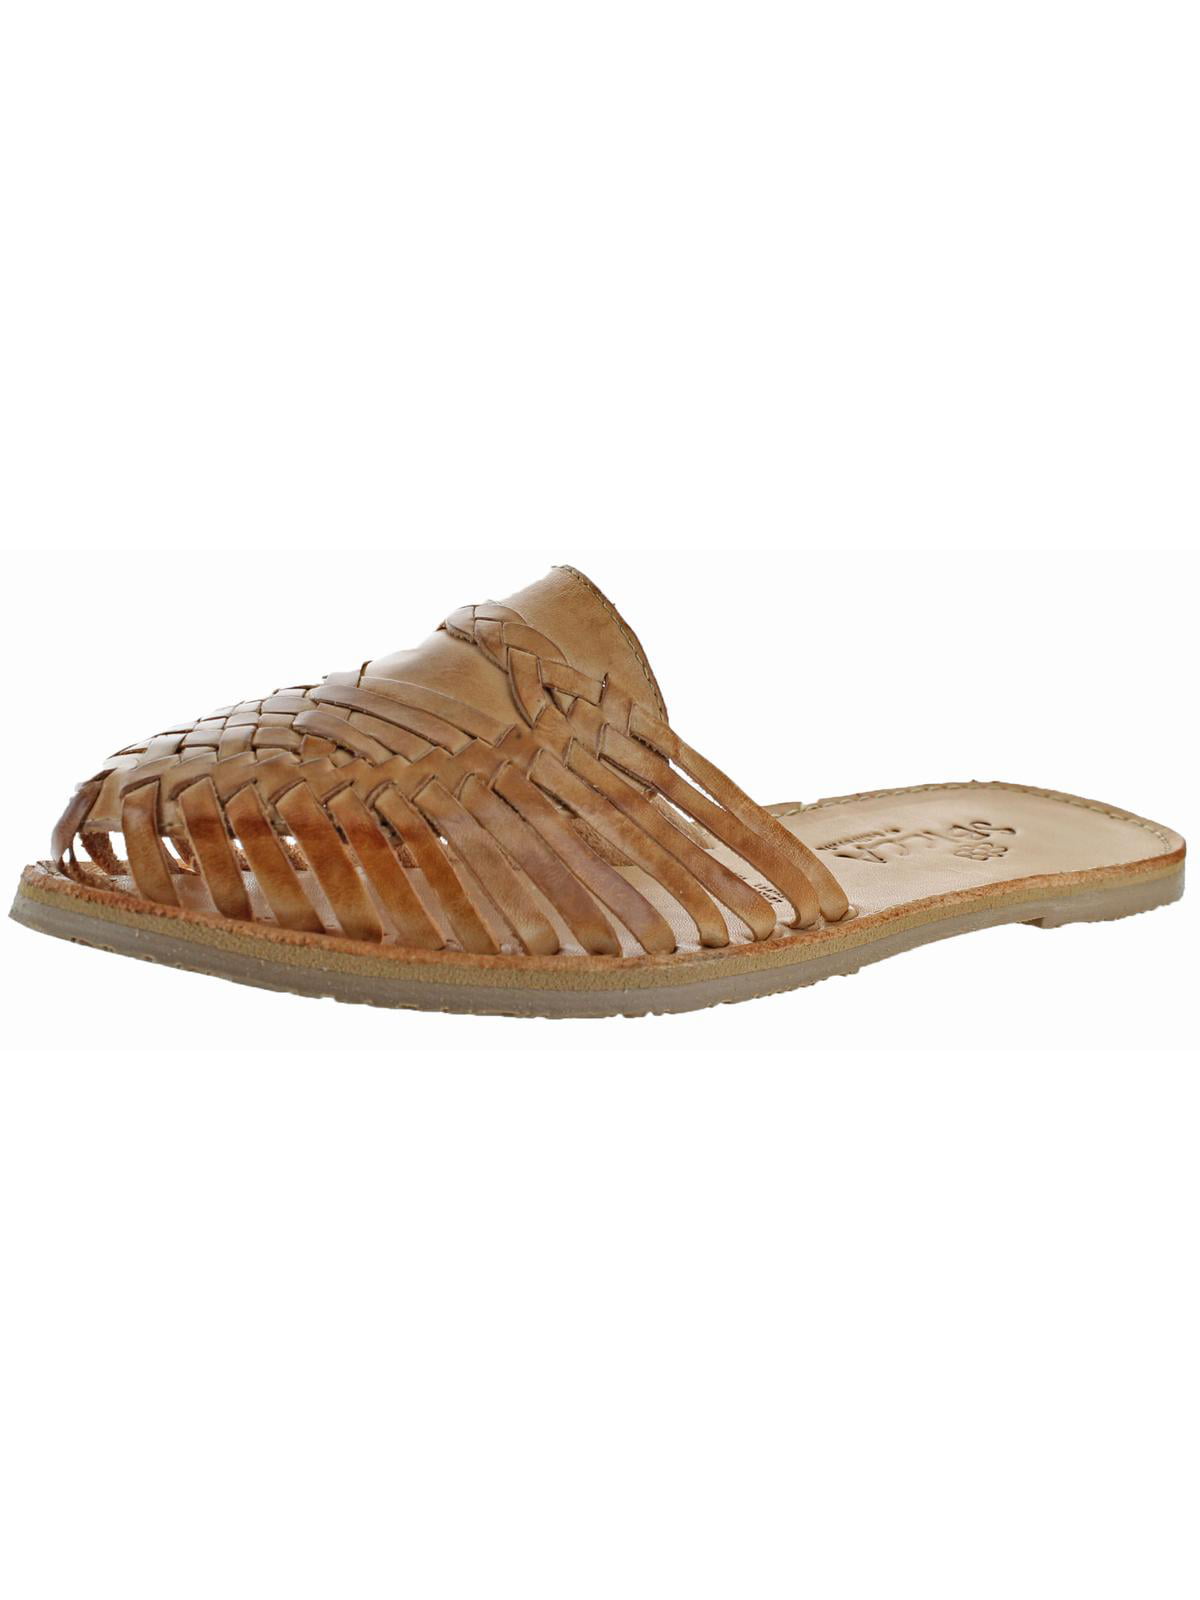 women's closed toe huarache sandals